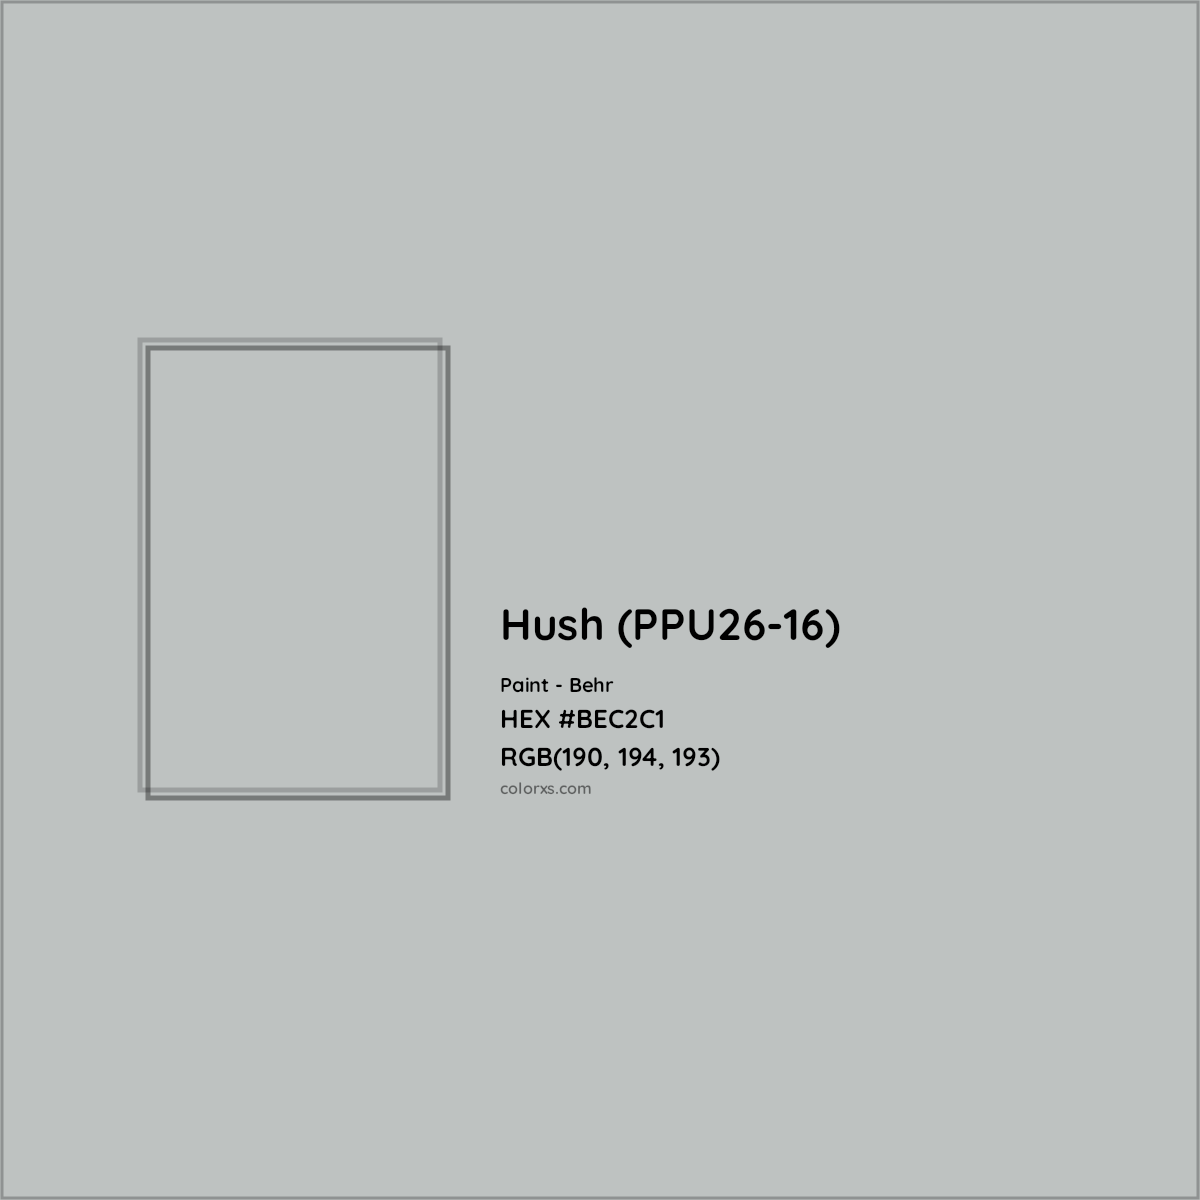 HEX #BEC2C1 Hush (PPU26-16) Paint Behr - Color Code